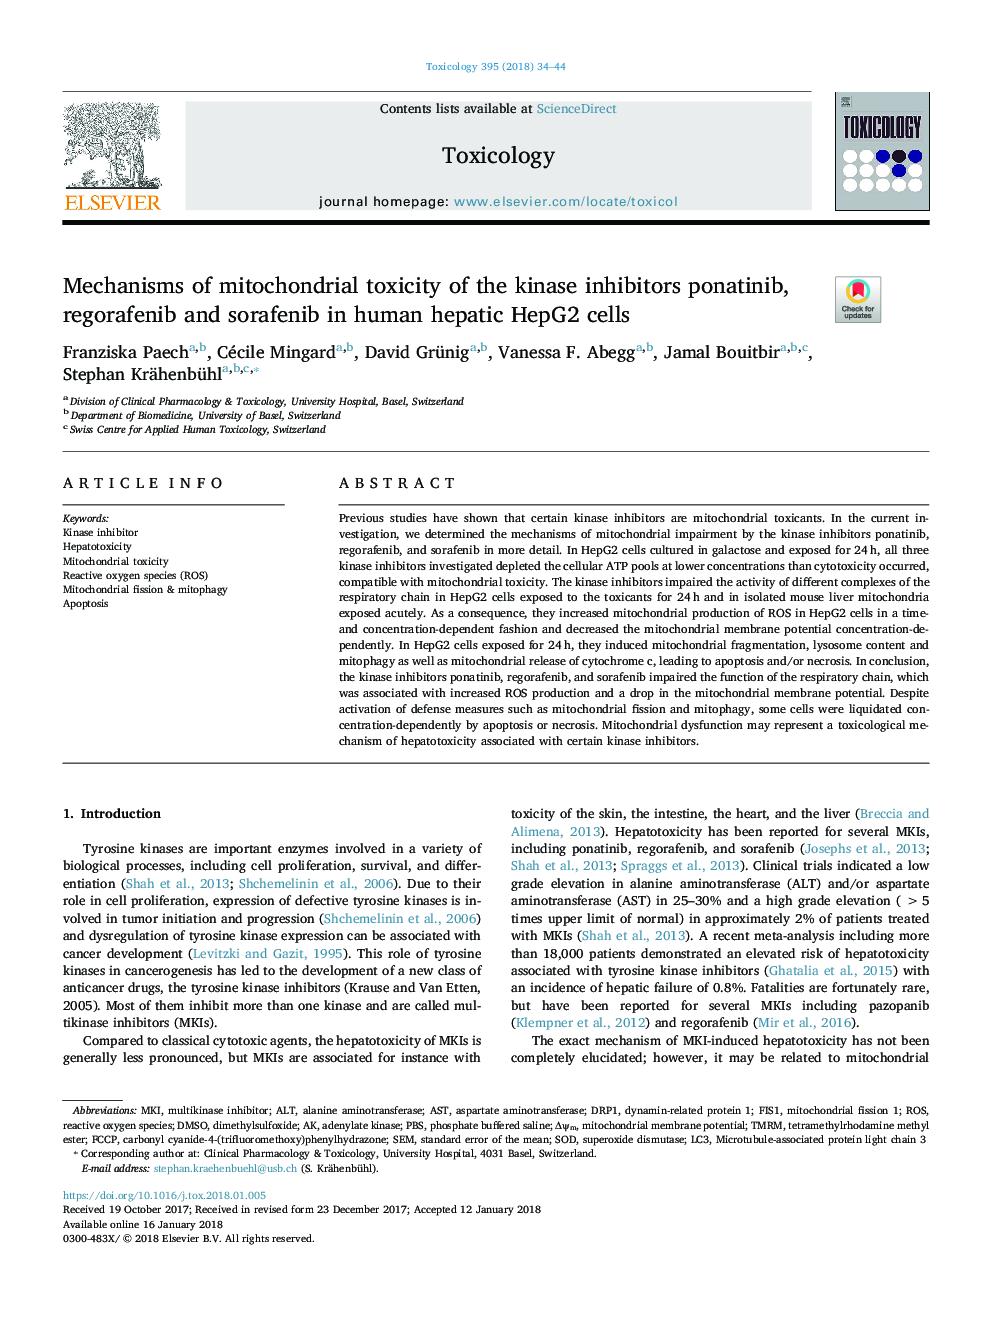 Mechanisms of mitochondrial toxicity of the kinase inhibitors ponatinib, regorafenib and sorafenib in human hepatic HepG2 cells